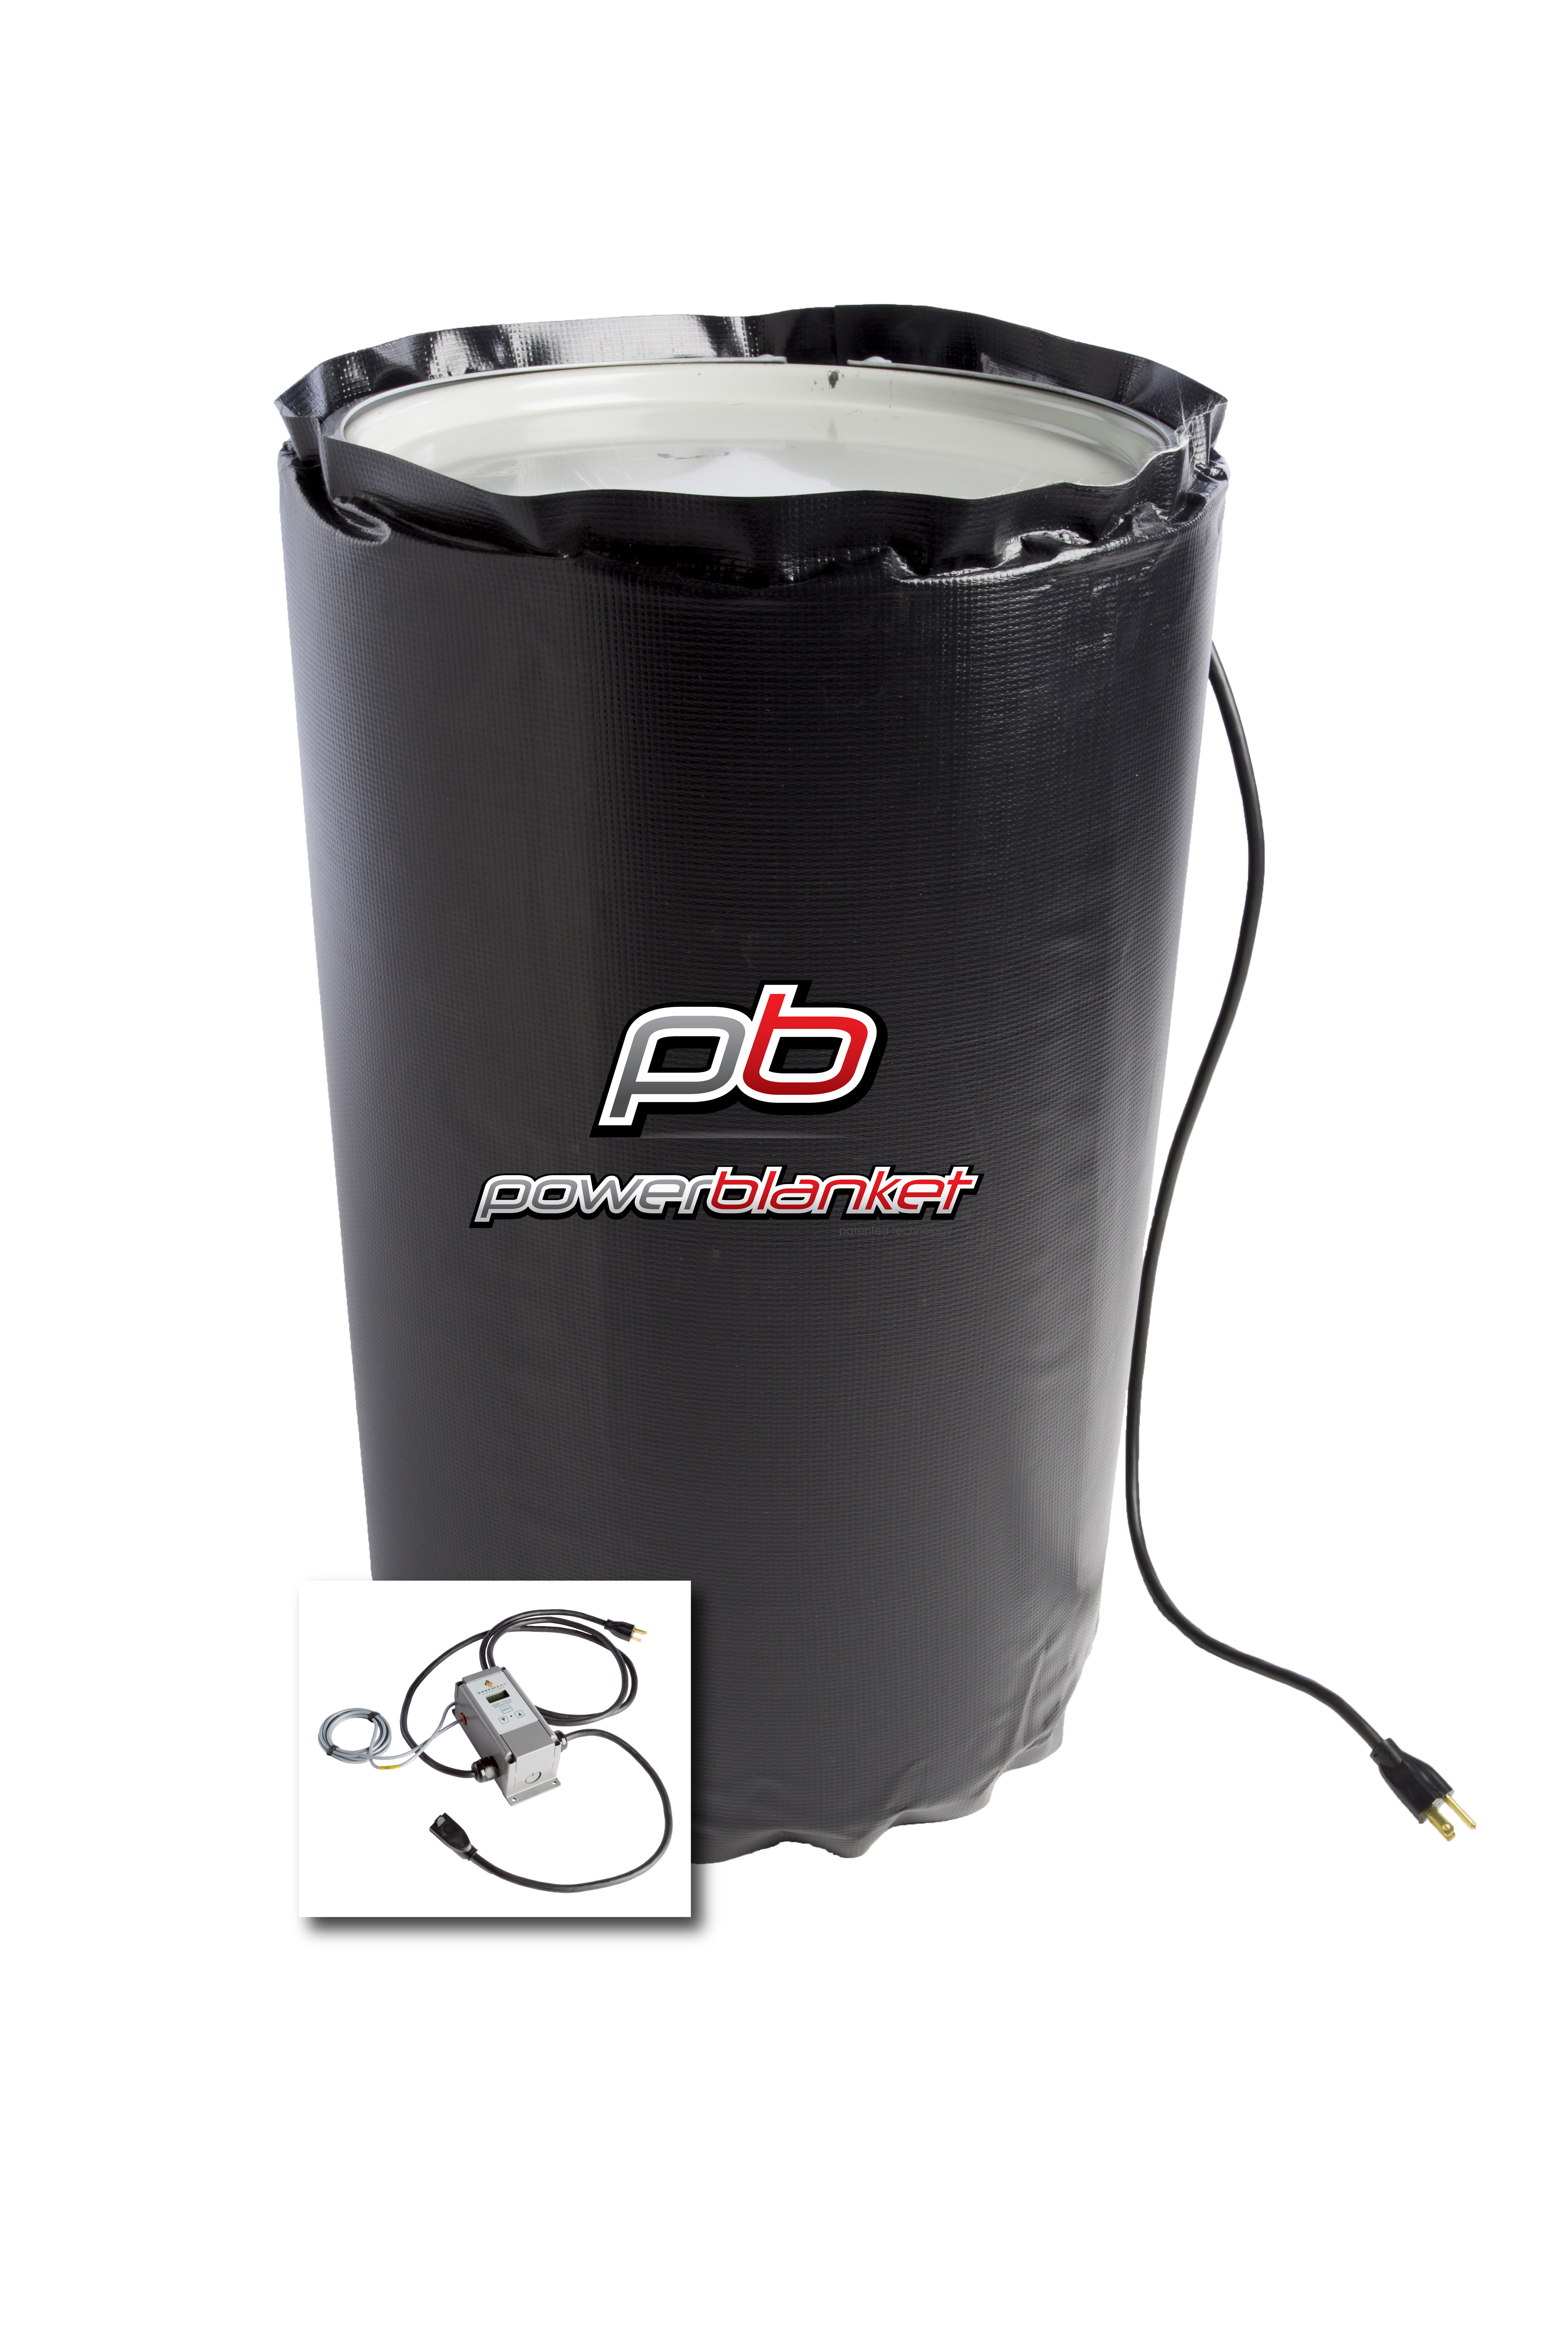 Powerblanket-Pro-55-gallon-drum-heater-small